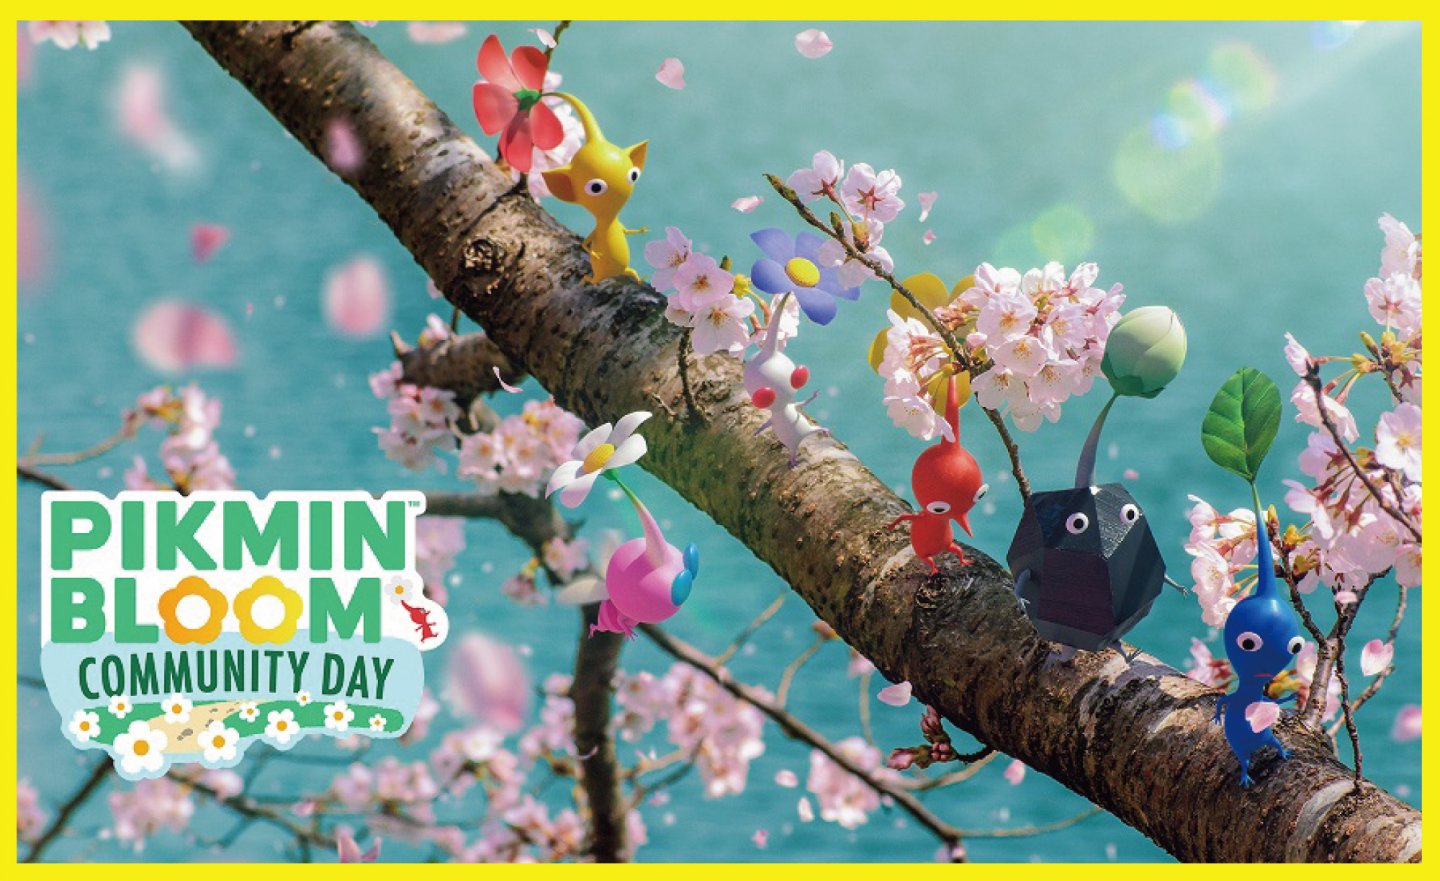 《Pikmin Bloom 皮克敏》全球首個實體社群日在台灣！3/13 北捷大安森林公園站